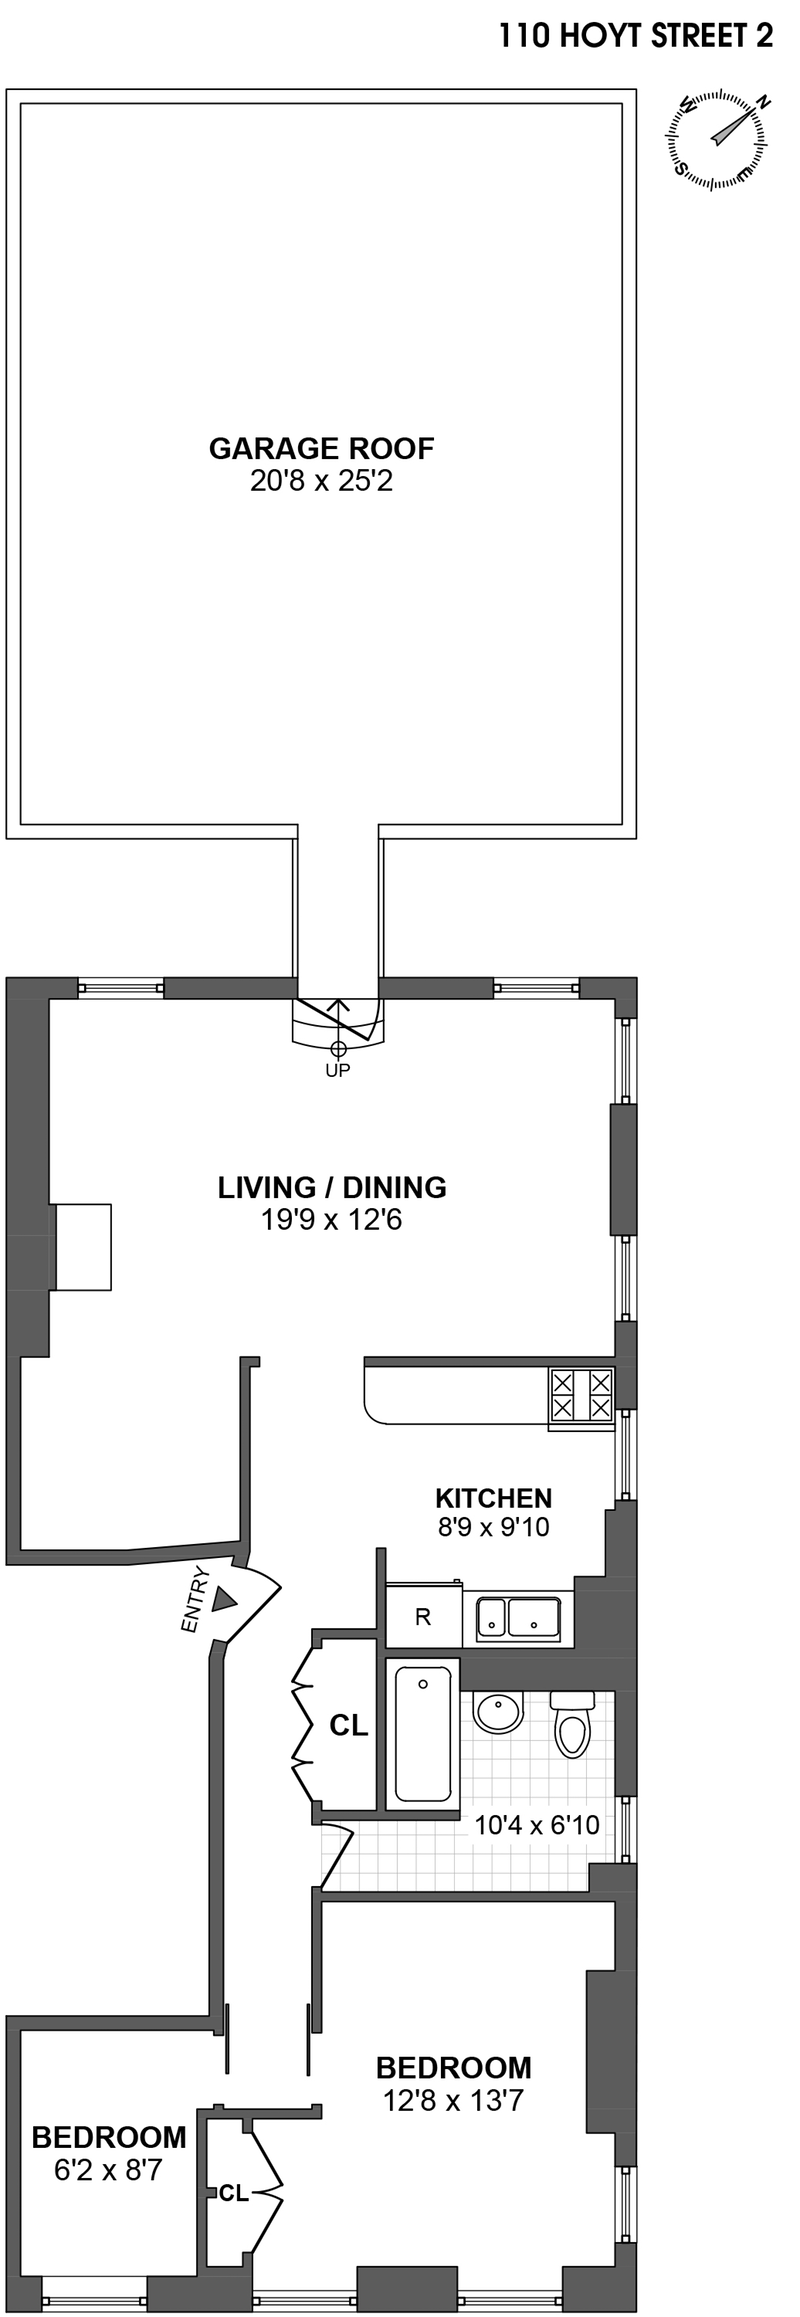 Floorplan for 110 Hoyt Street, 2